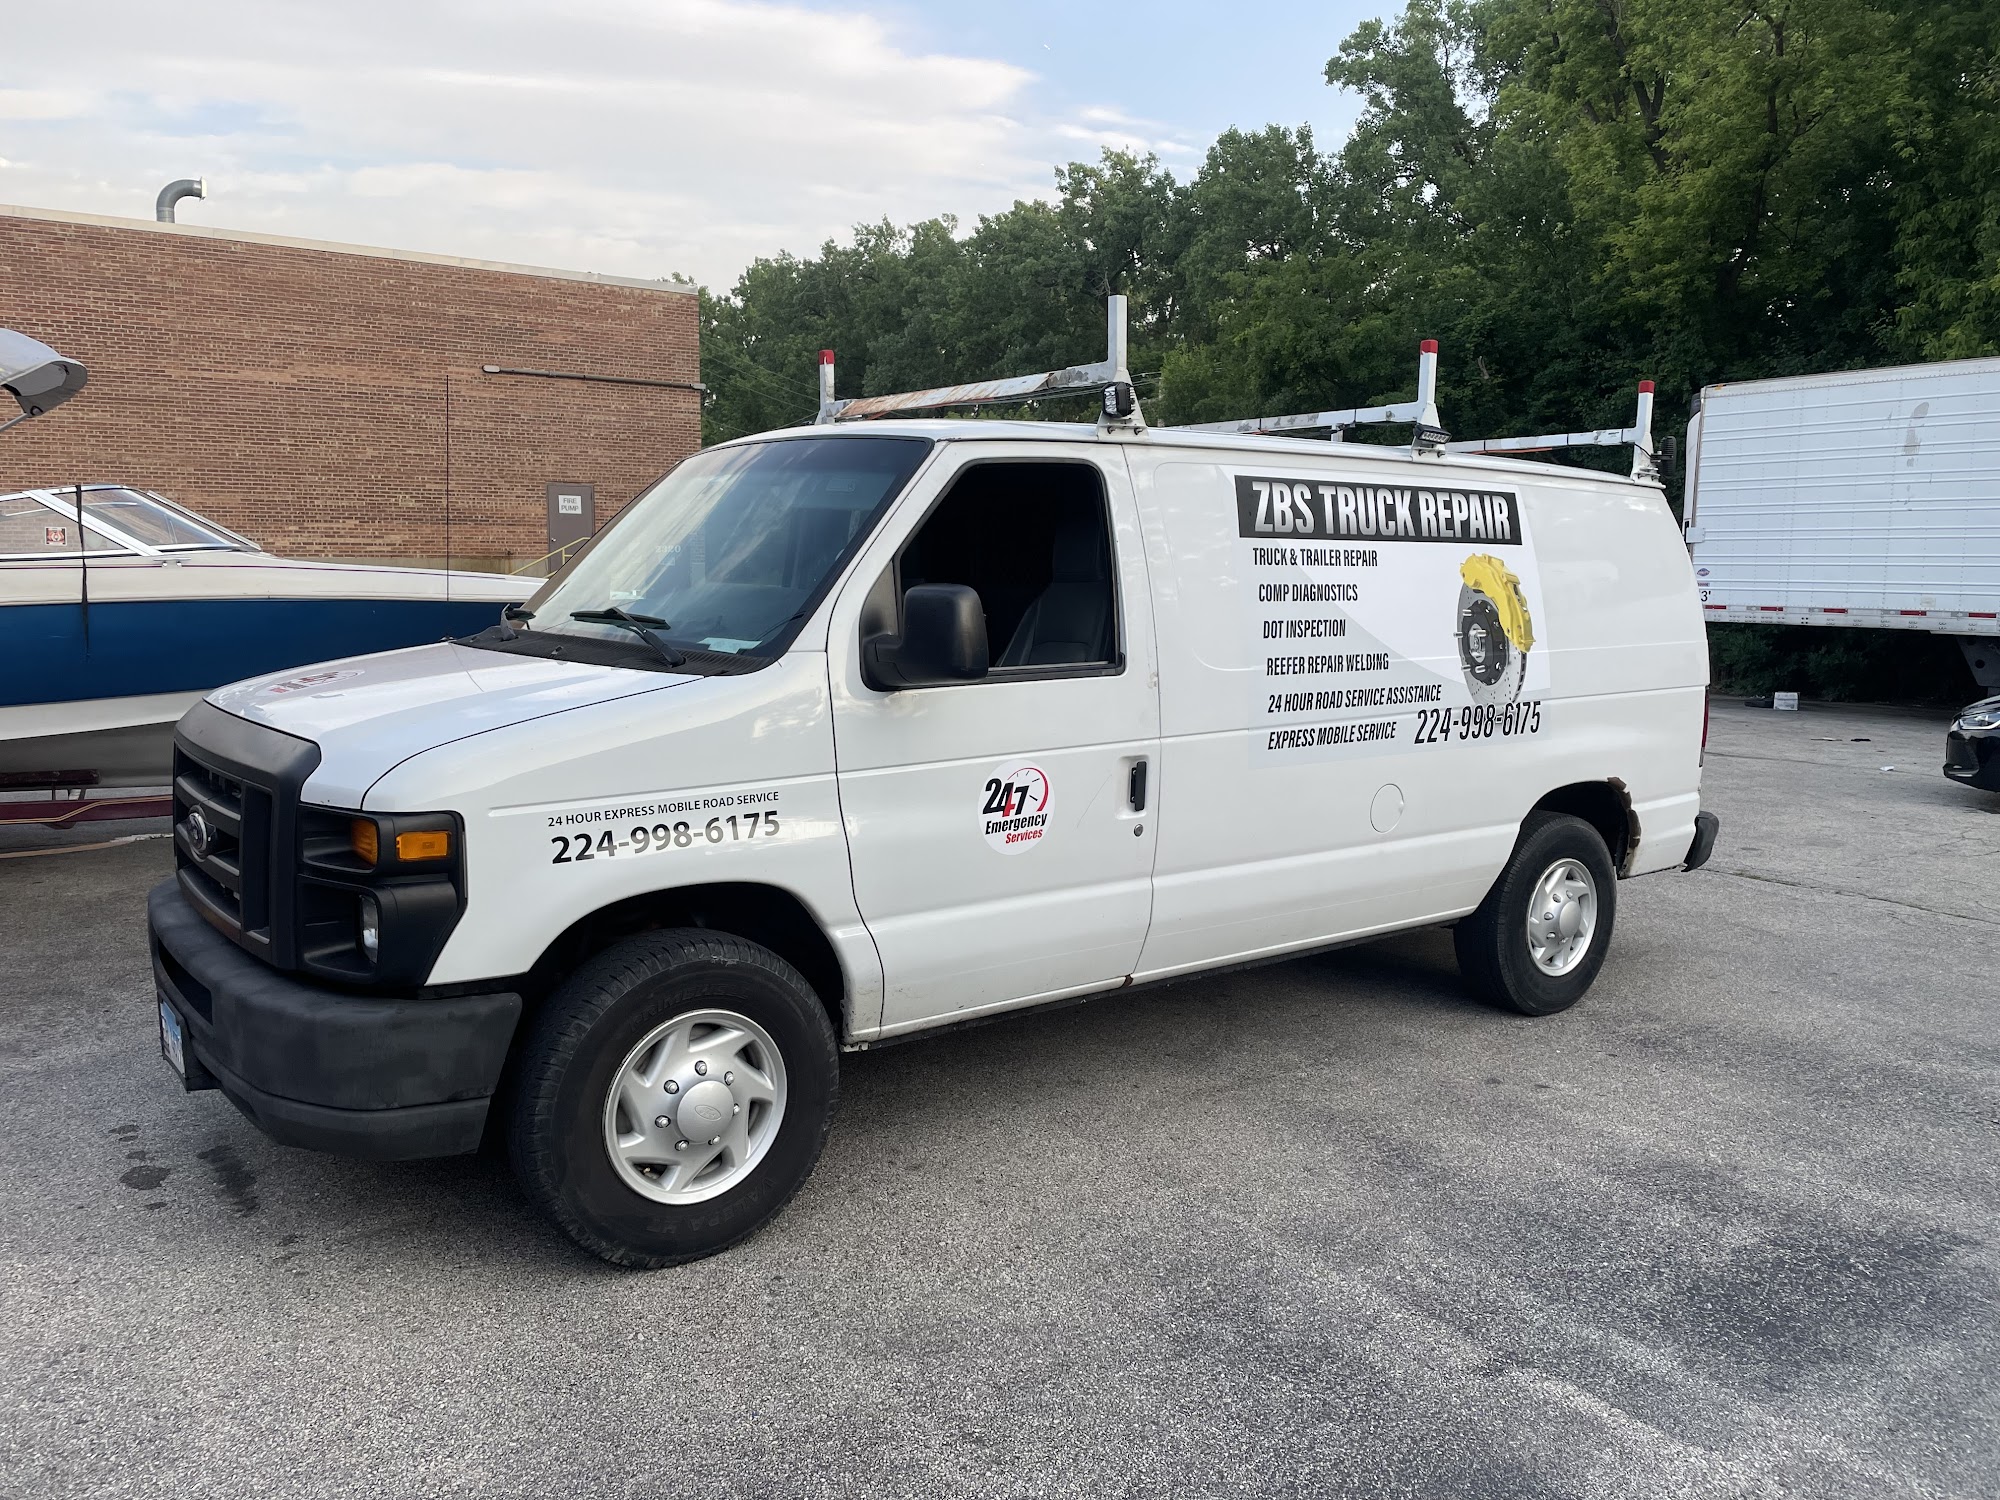 Mobile Truck and Trailer repair ZBS